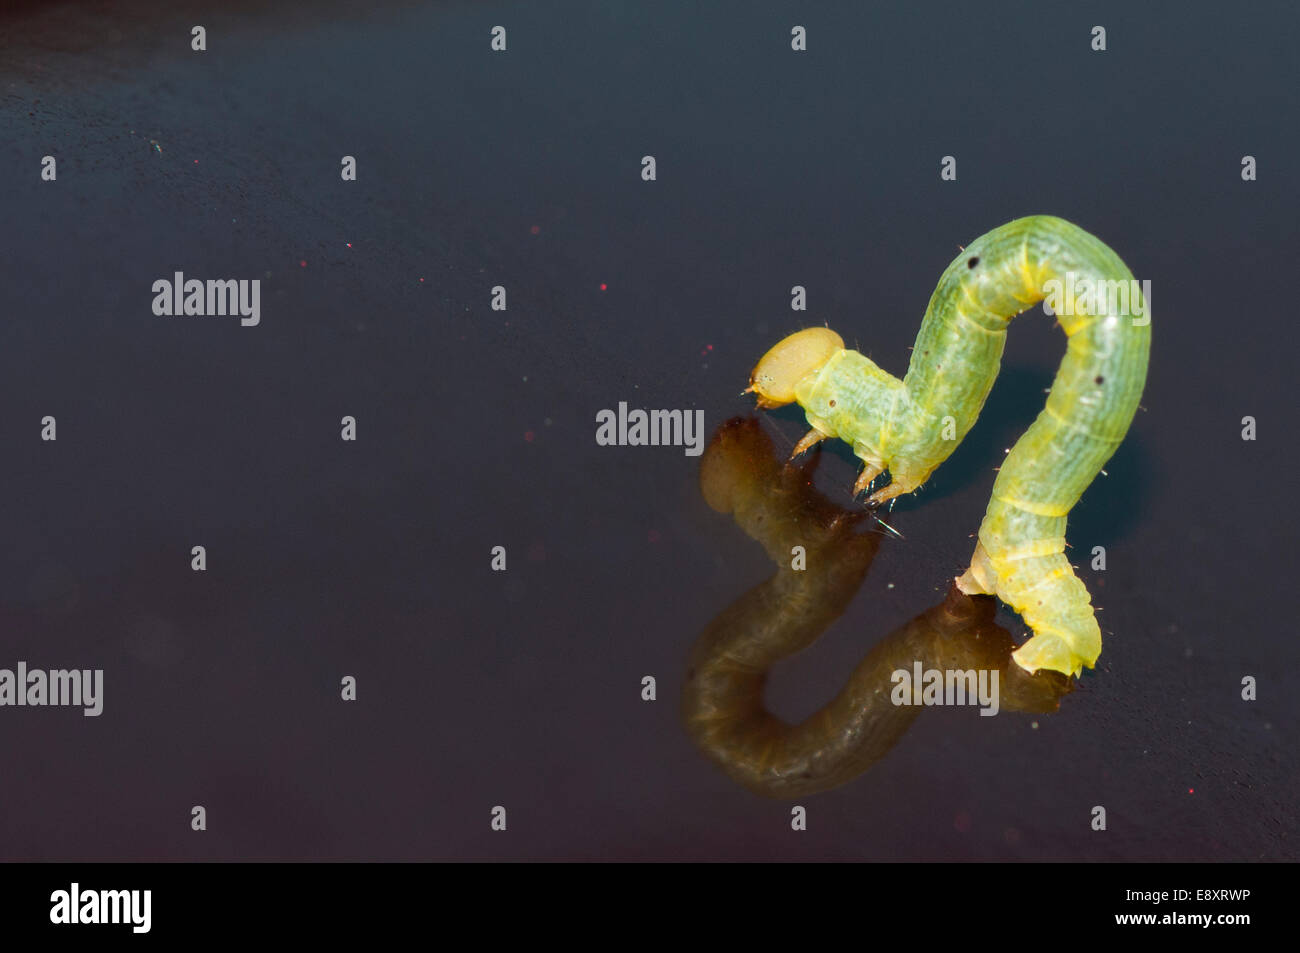 Inchworm looper bent on a dark surface Stock Photo